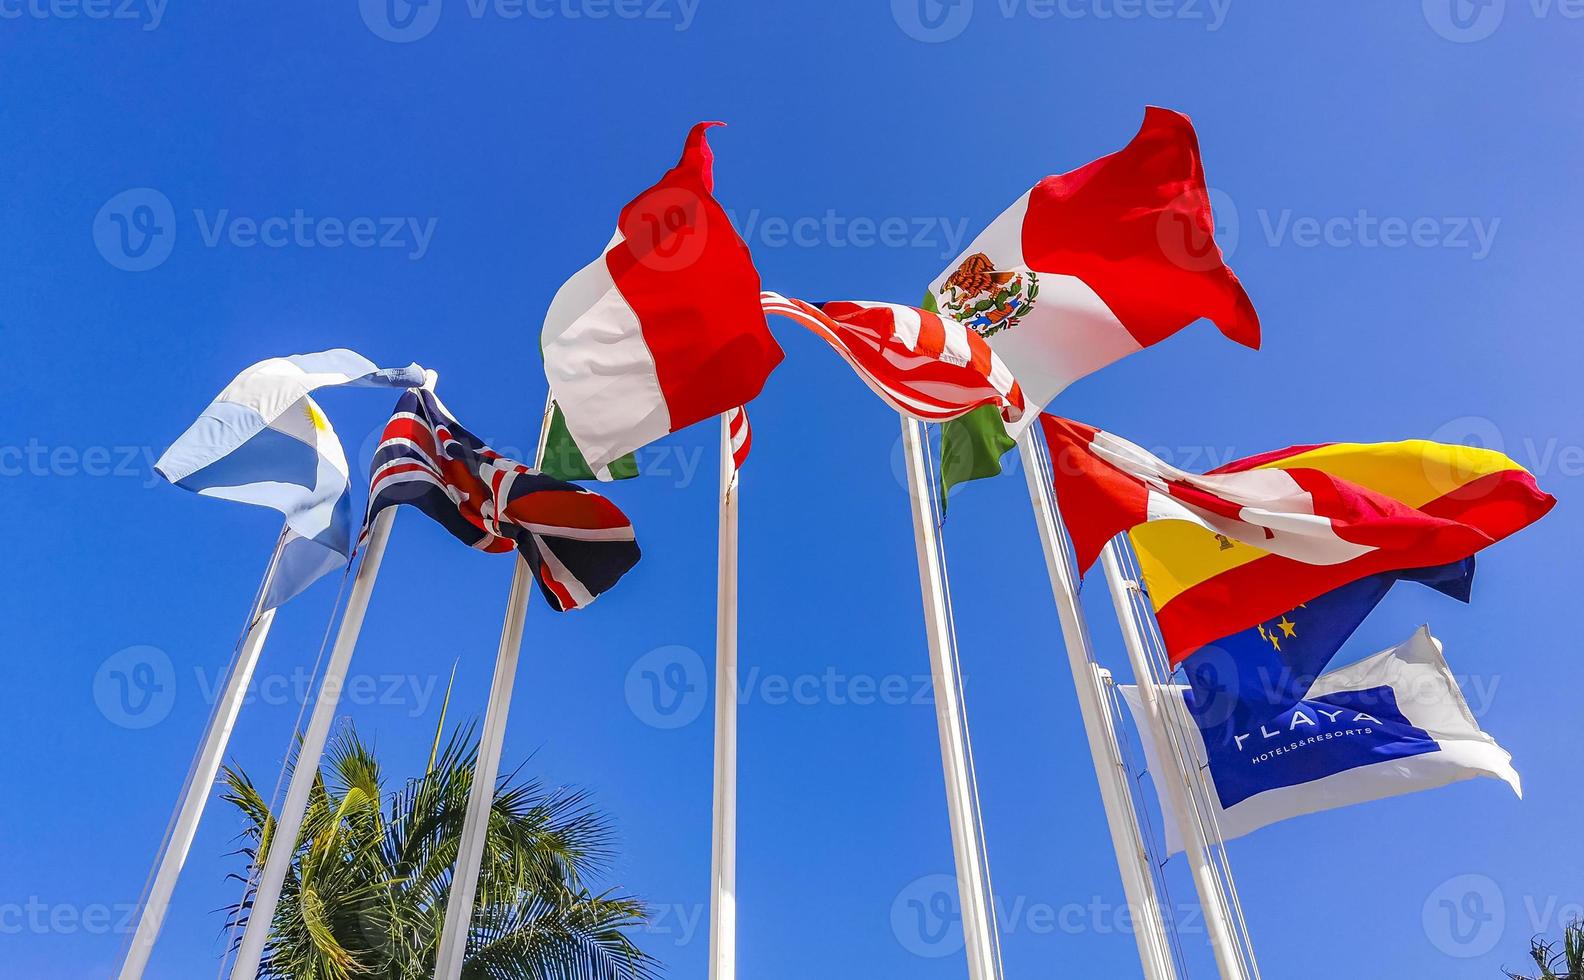 vlaggen van vele landen zoals spanje verenigde staten canada mexico. foto